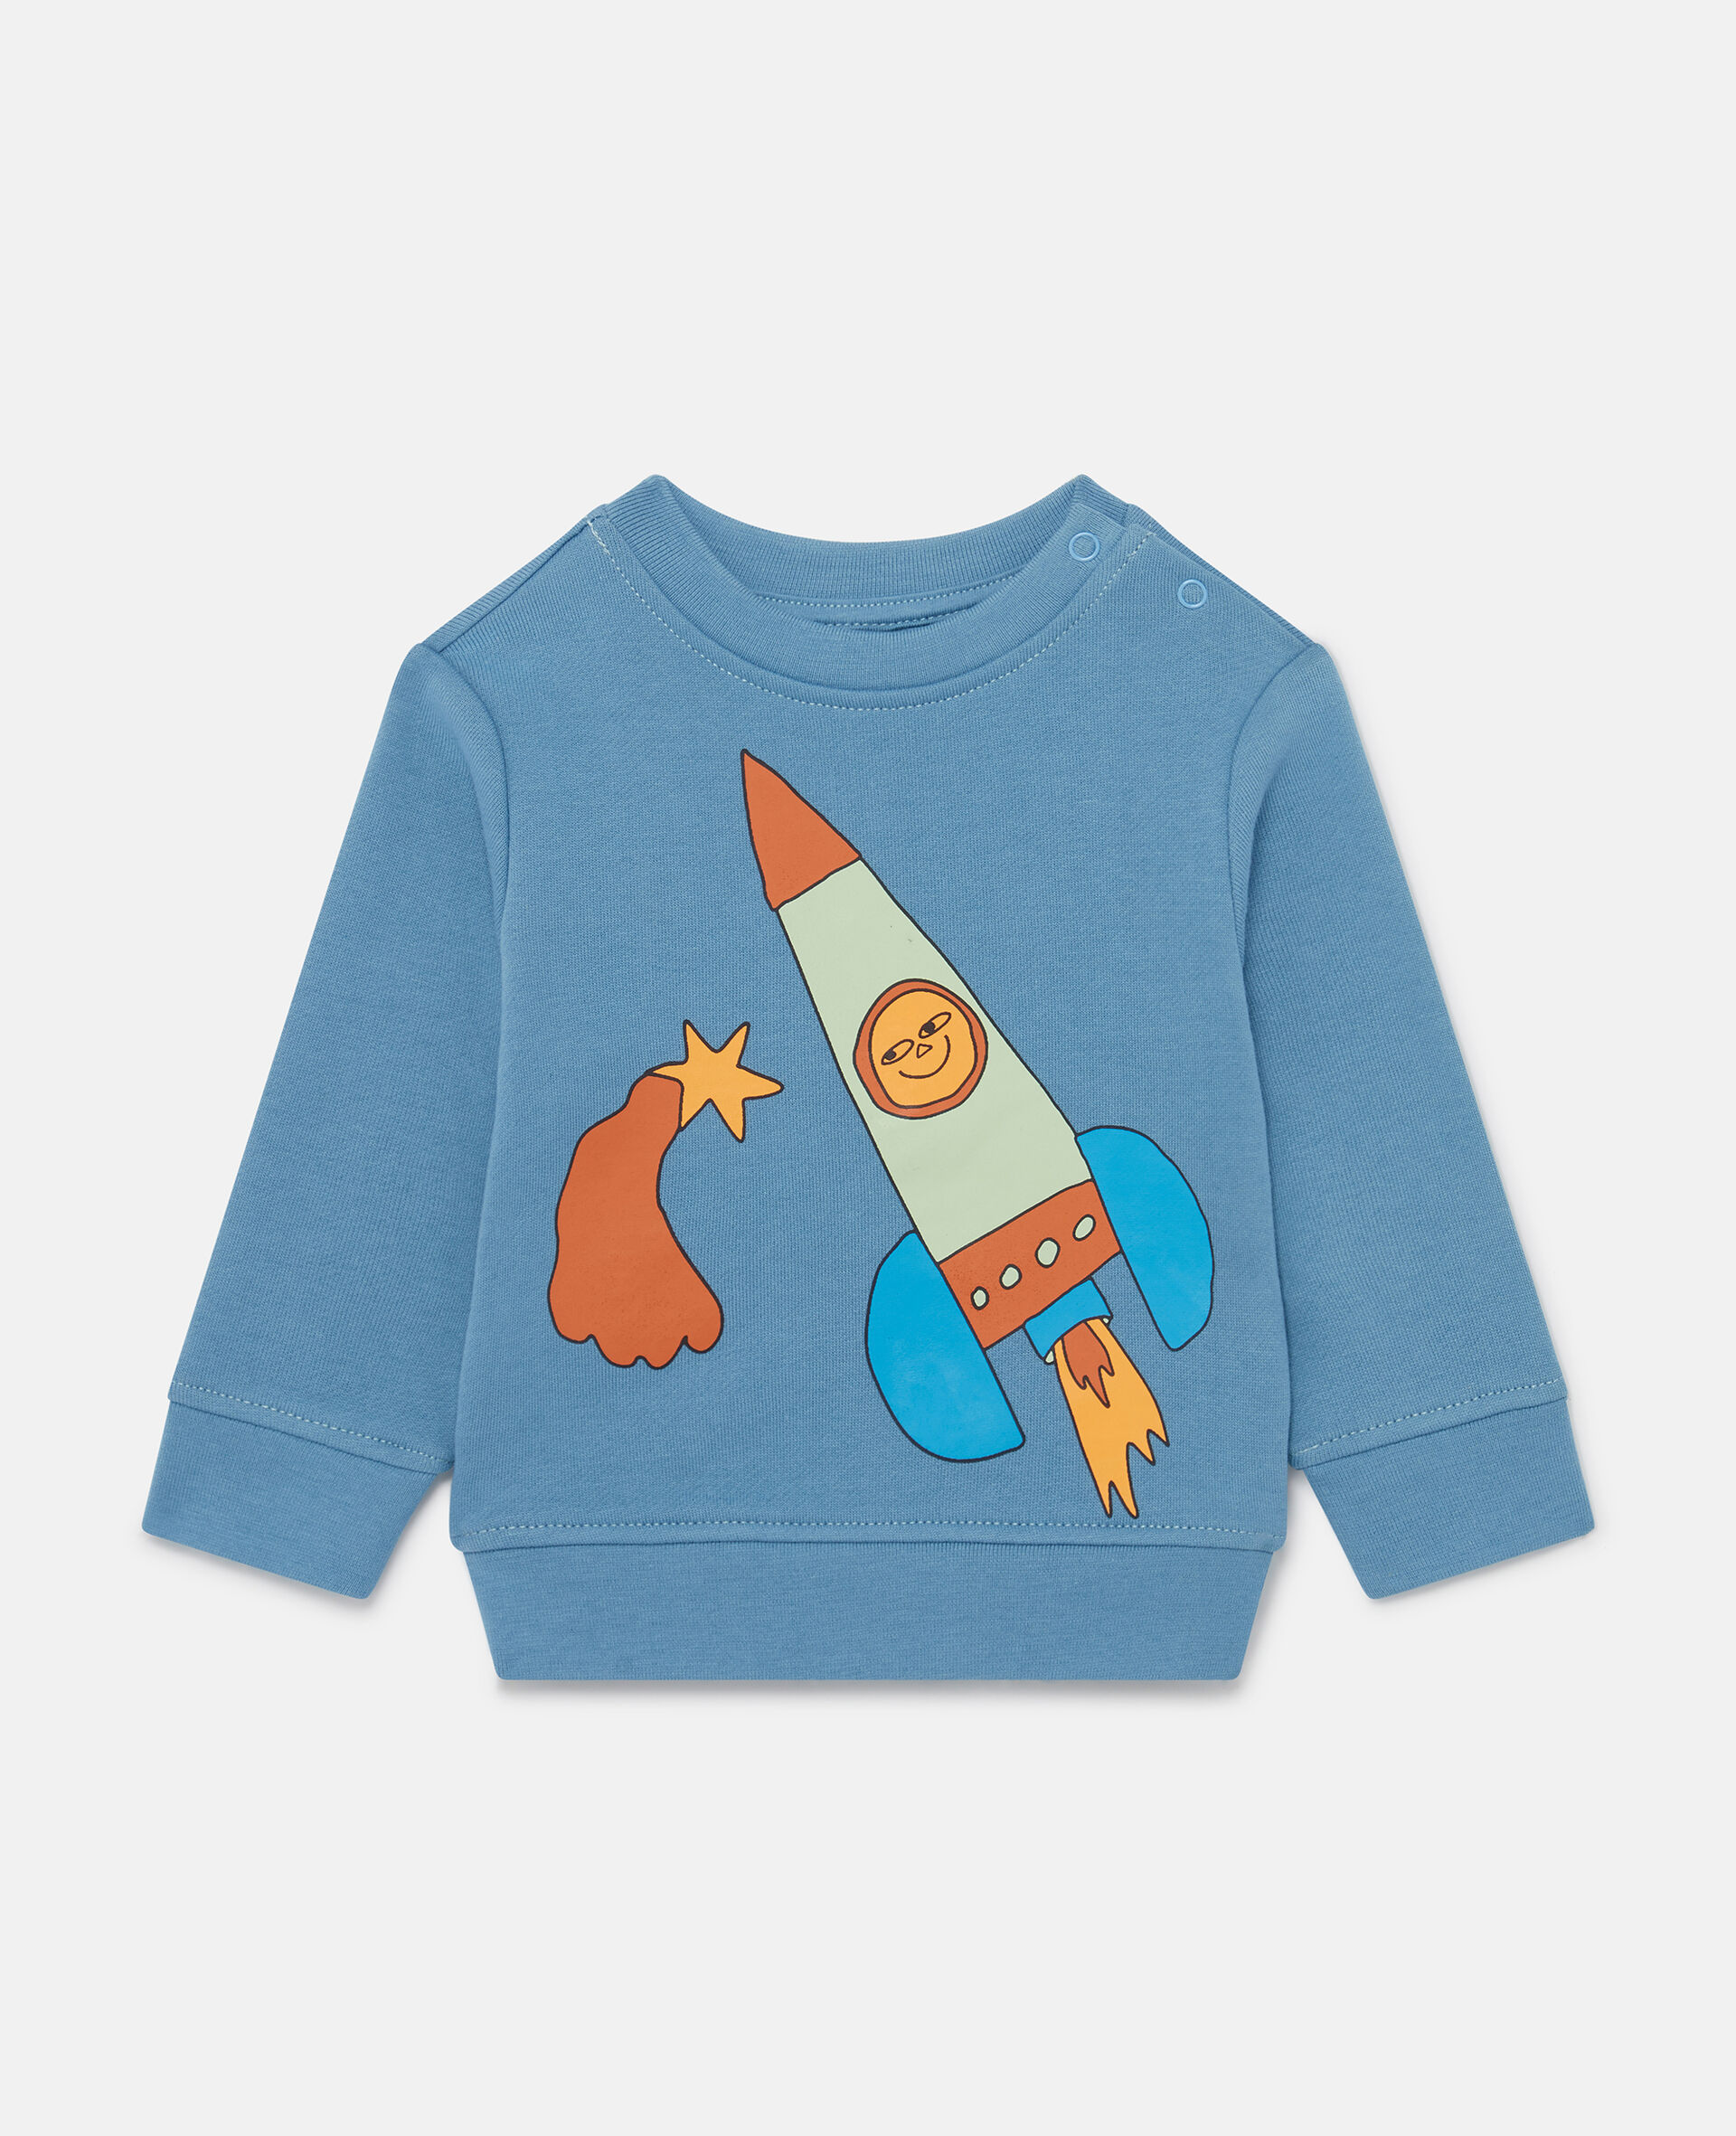 Space Print Sweatshirt-Blue-large image number 0